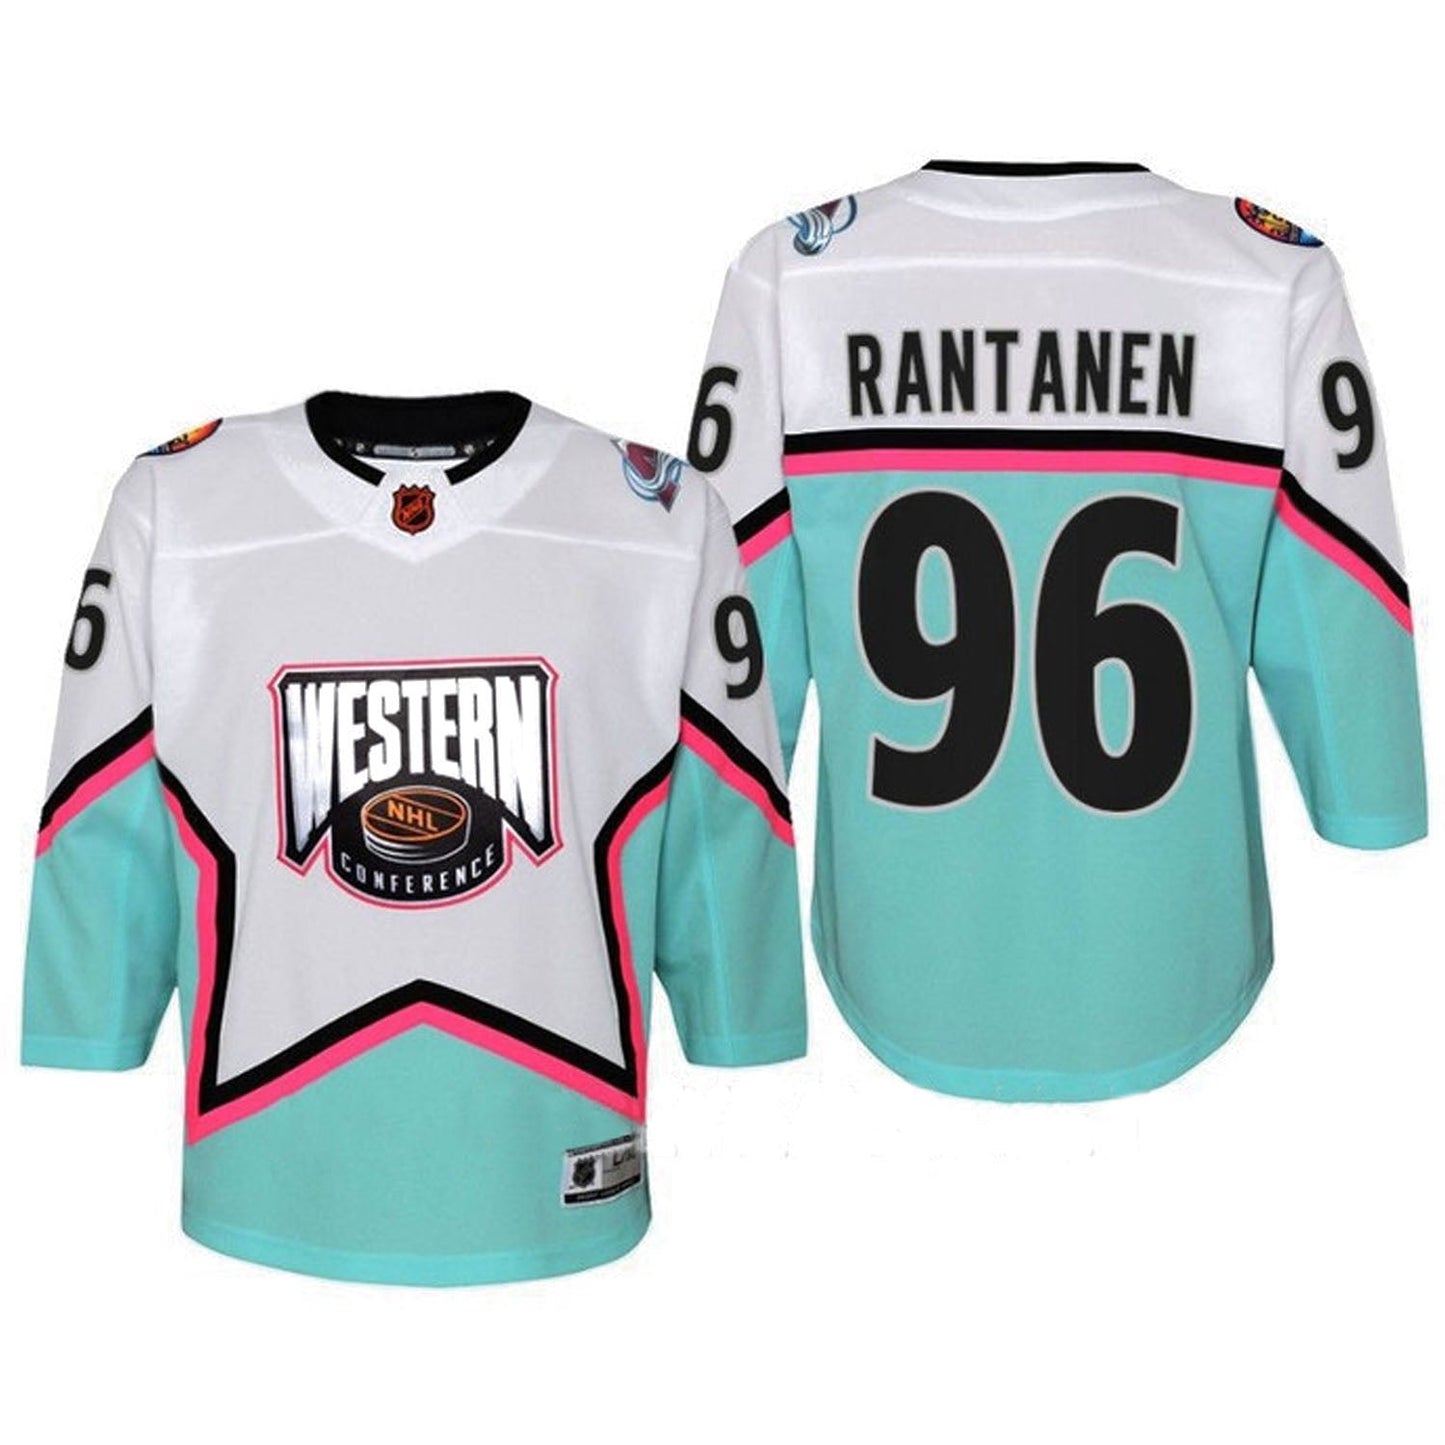 NHL Mikko Rantanen Western All Star 96 Jersey